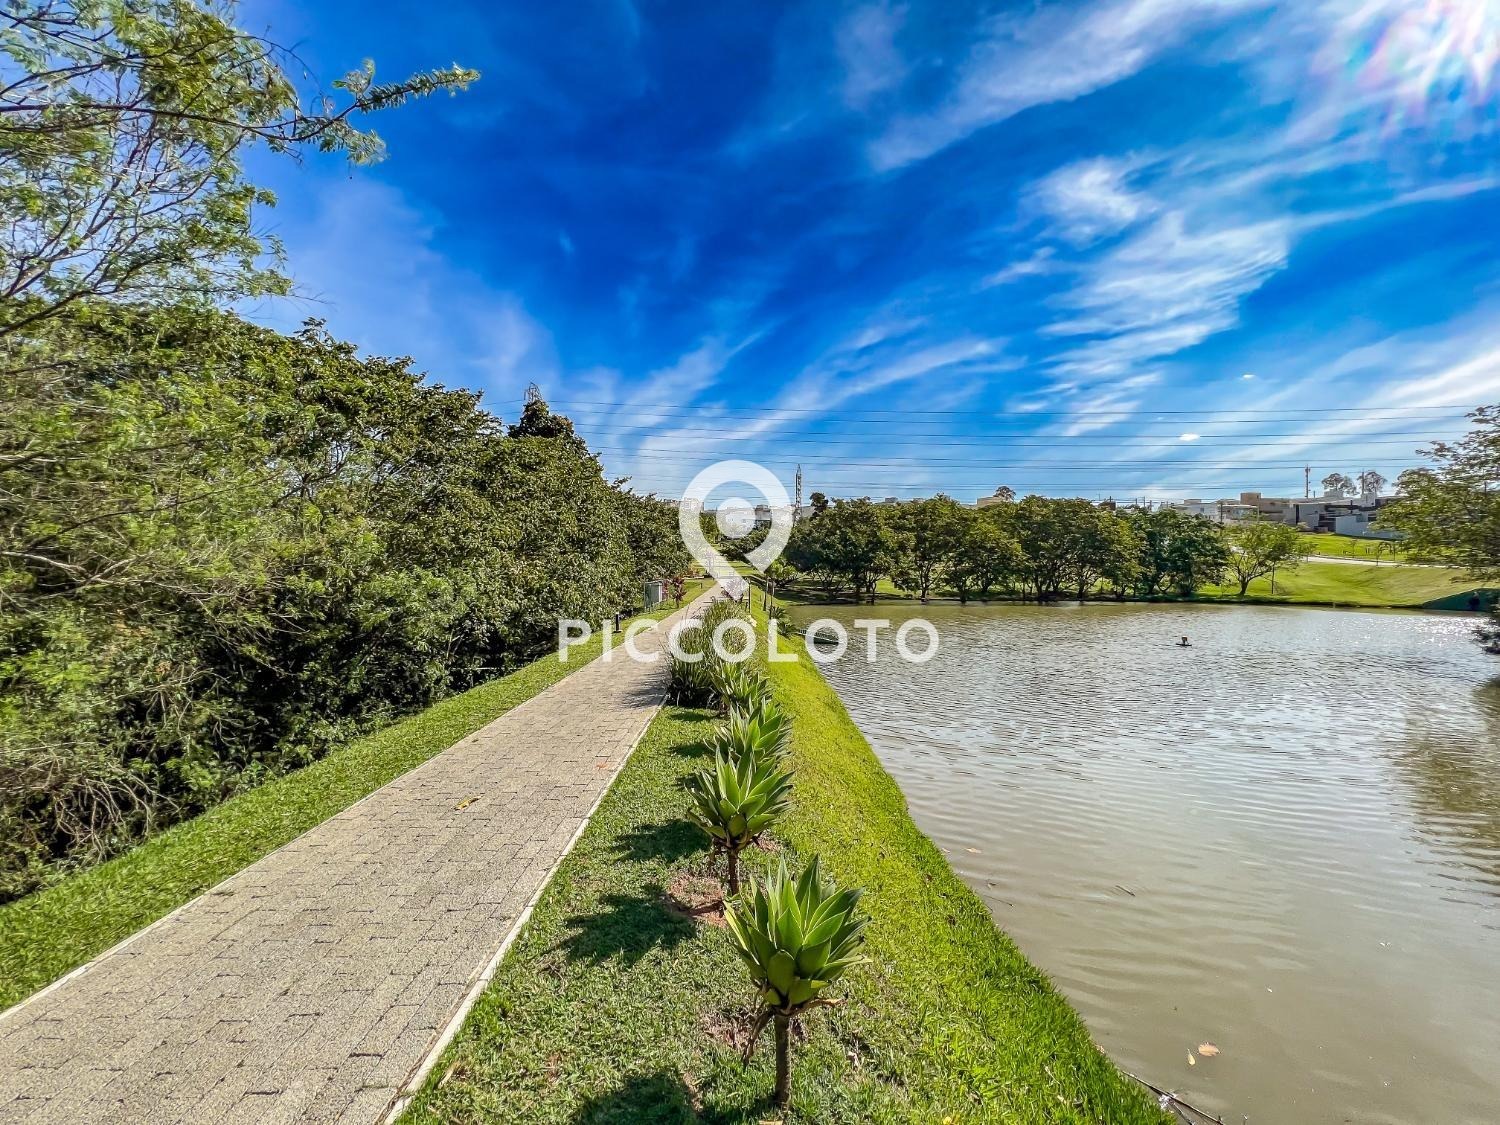 Piccoloto -Casa para alugar no Loteamento Parque dos Alecrins em Campinas